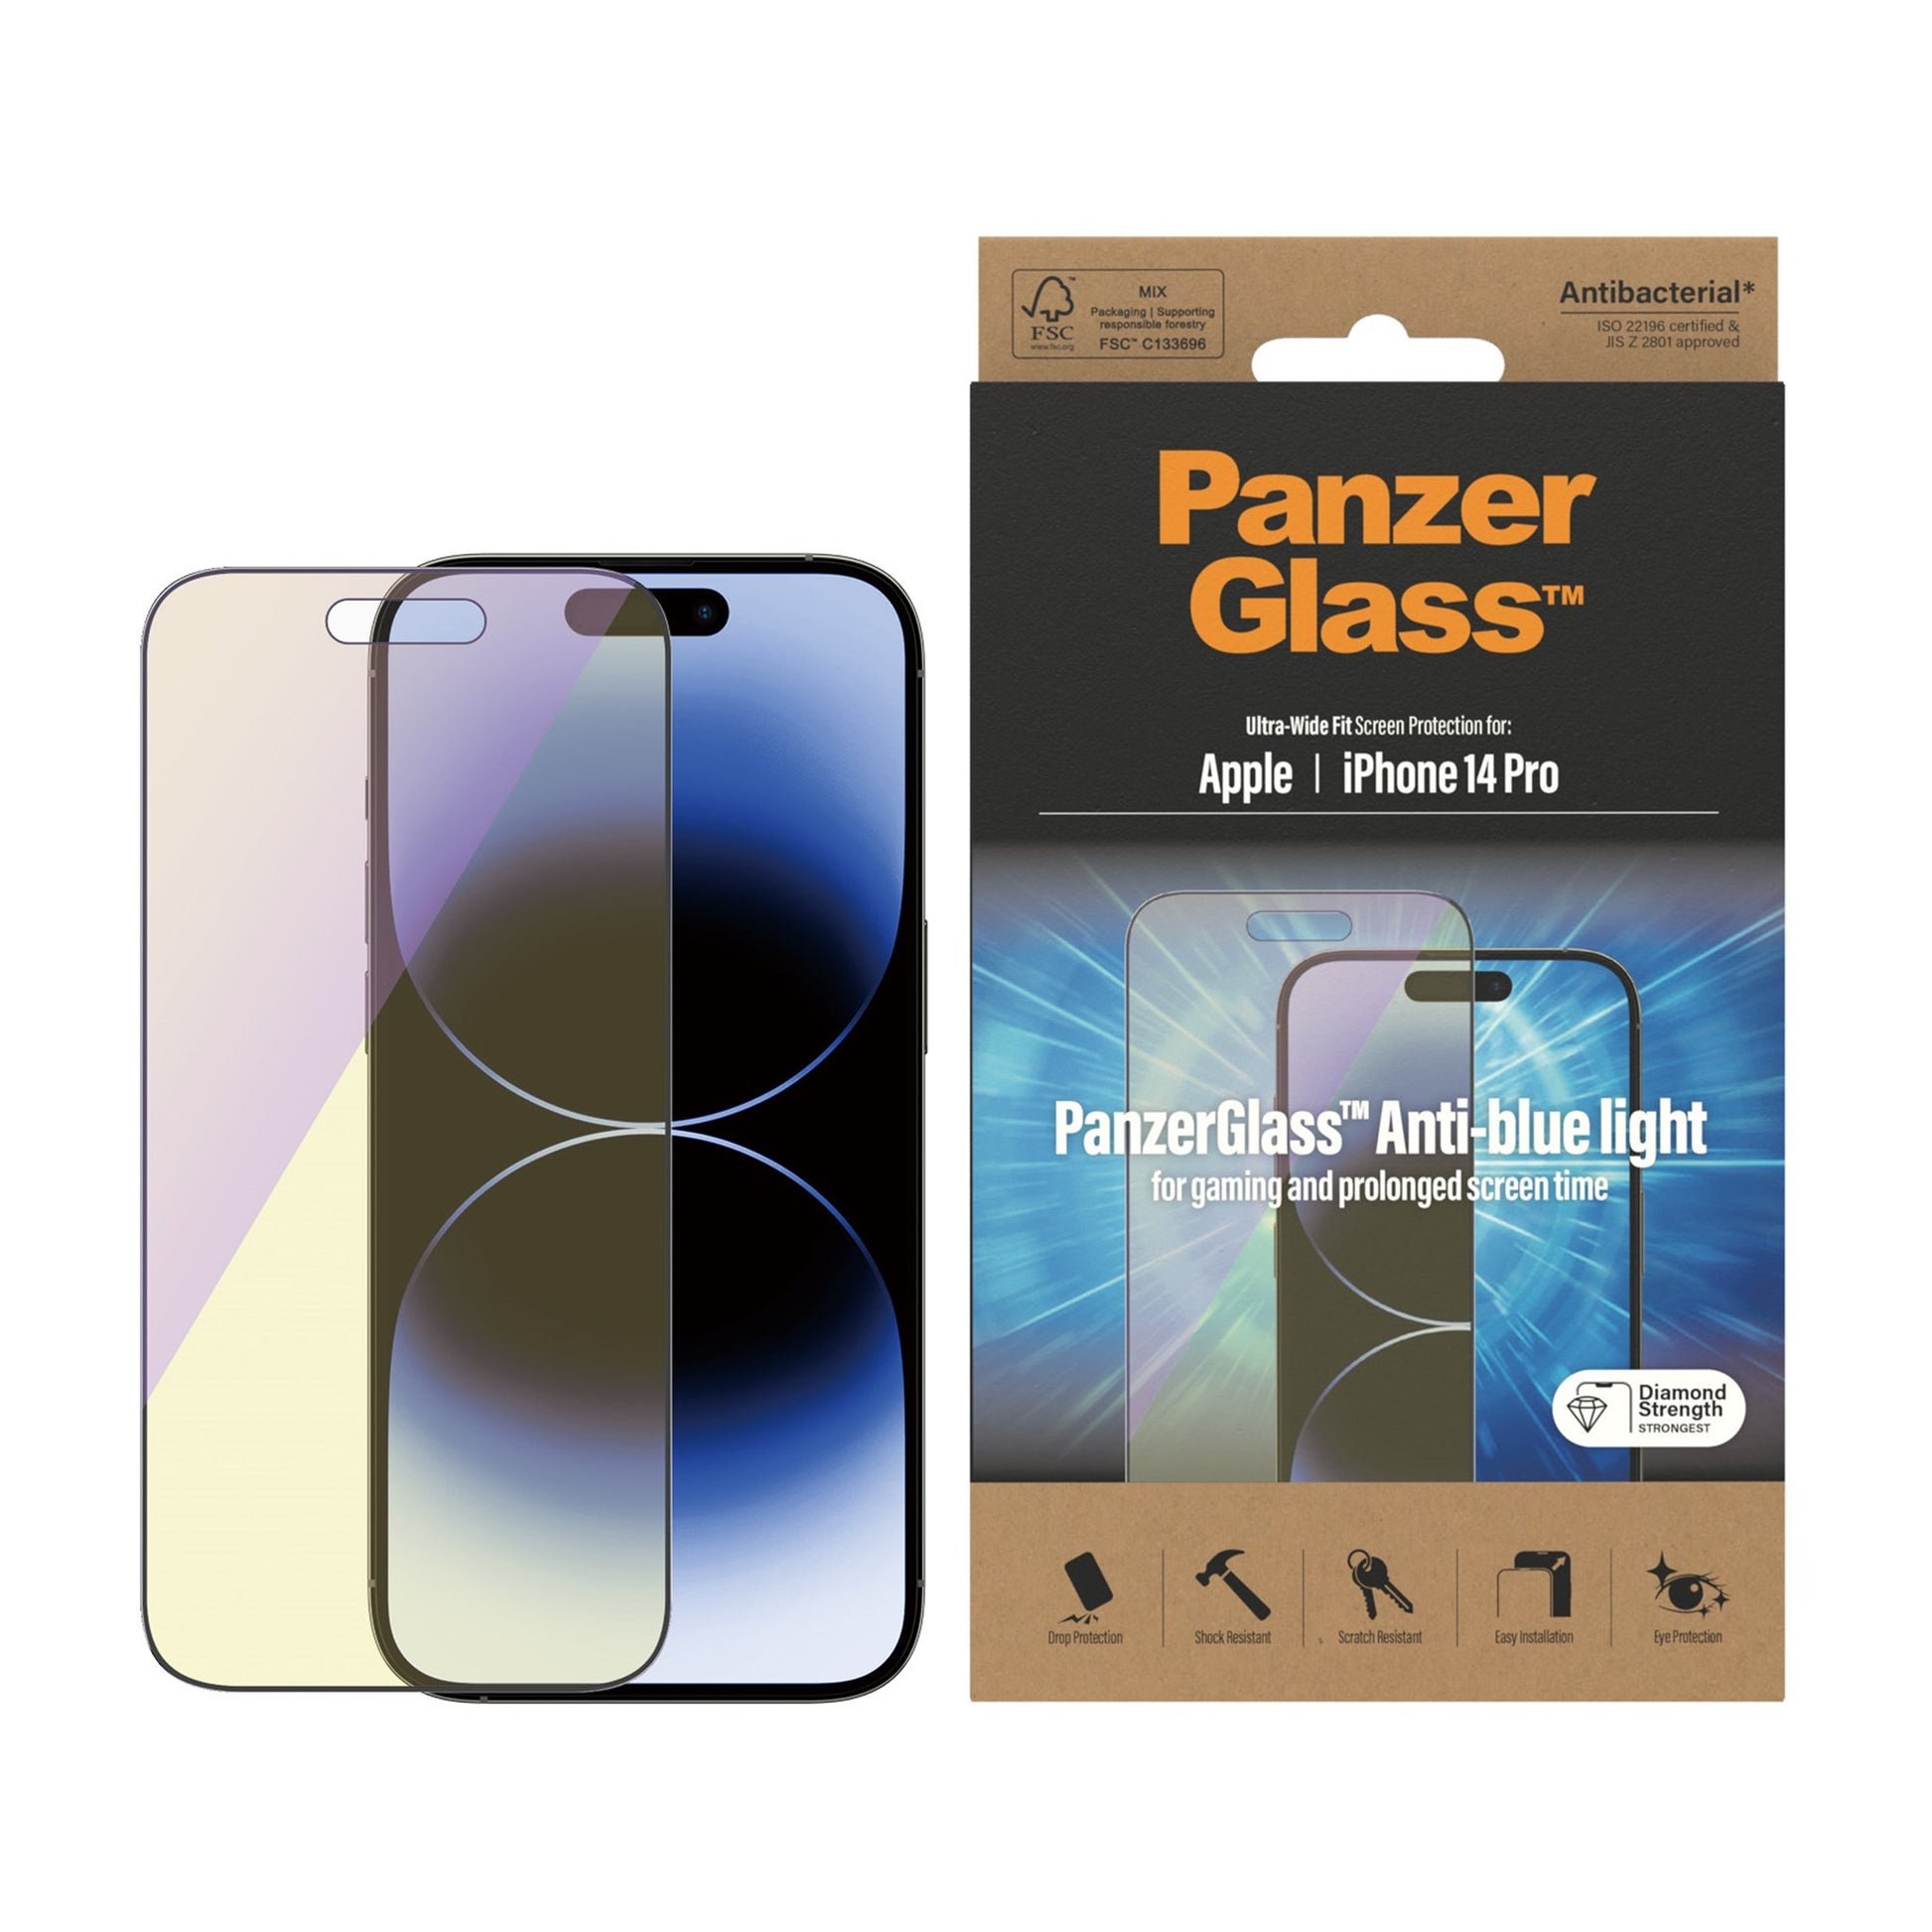 PanzerGlass™ Anti-blue light Screen Protector Apple iPhone 14 Pro | Ultra-Wide Fit 2